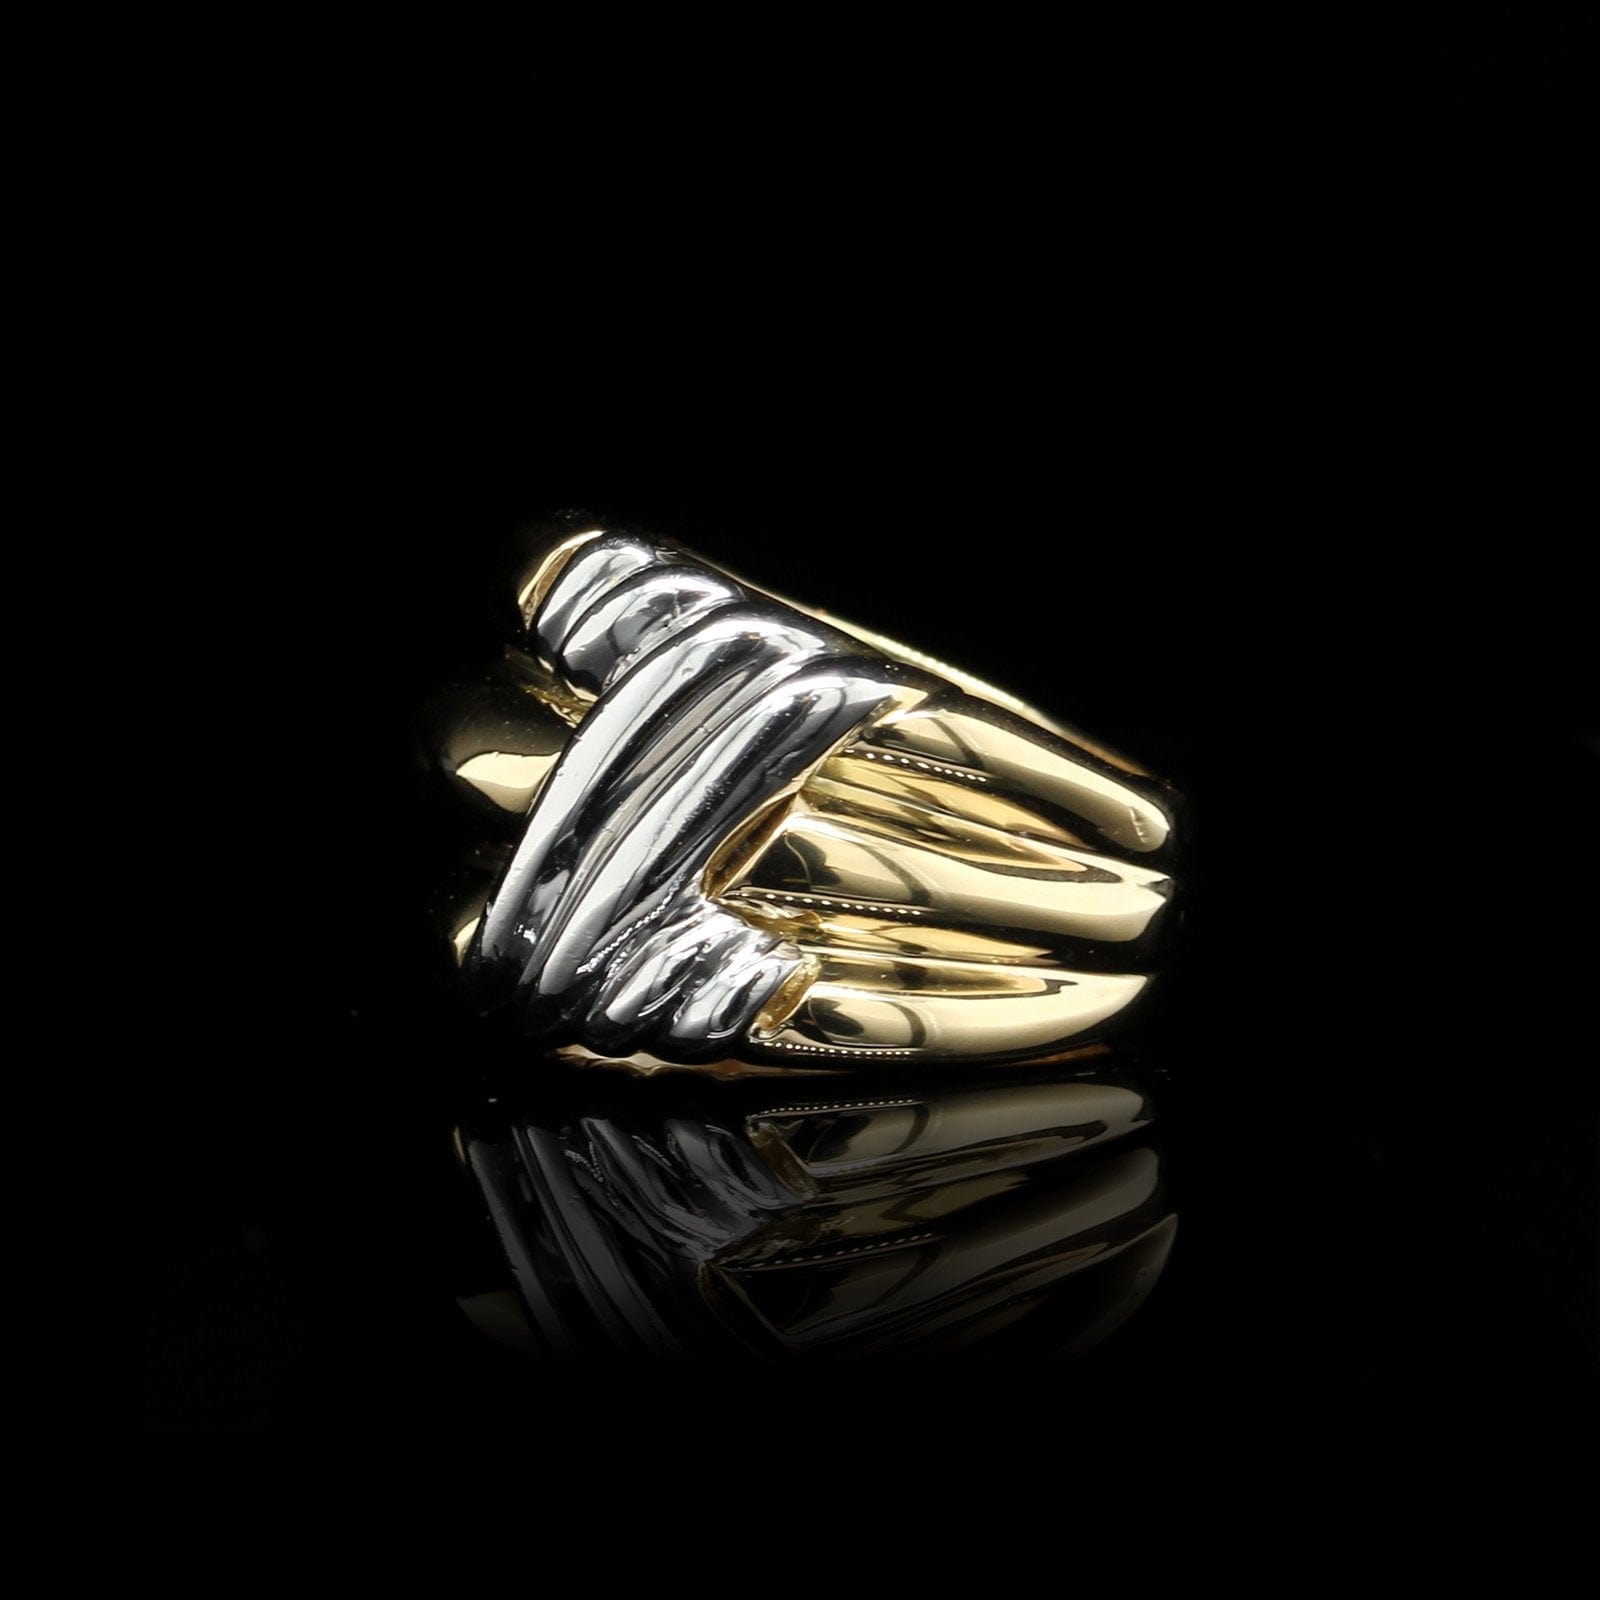 18K Two-tone Gold Estate Ring